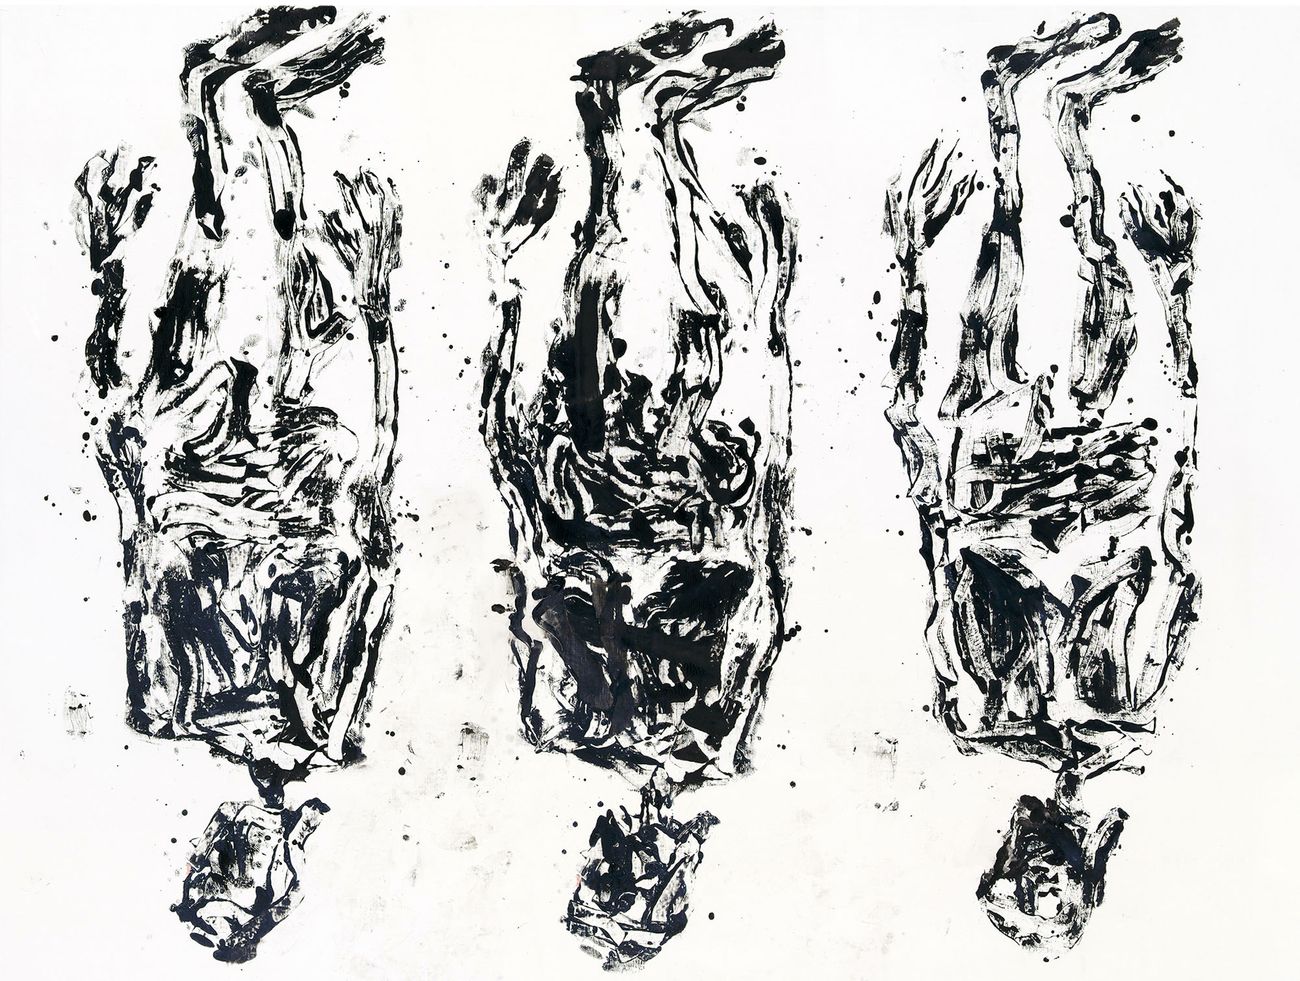 Georg Baselitz, Surrealismus die Filzlüge, 2020, olio su tela, 300x400 cm © Georg Baselitz 2021. Photo Jochen Littkemann, Berlino. Courtesy Gagosian